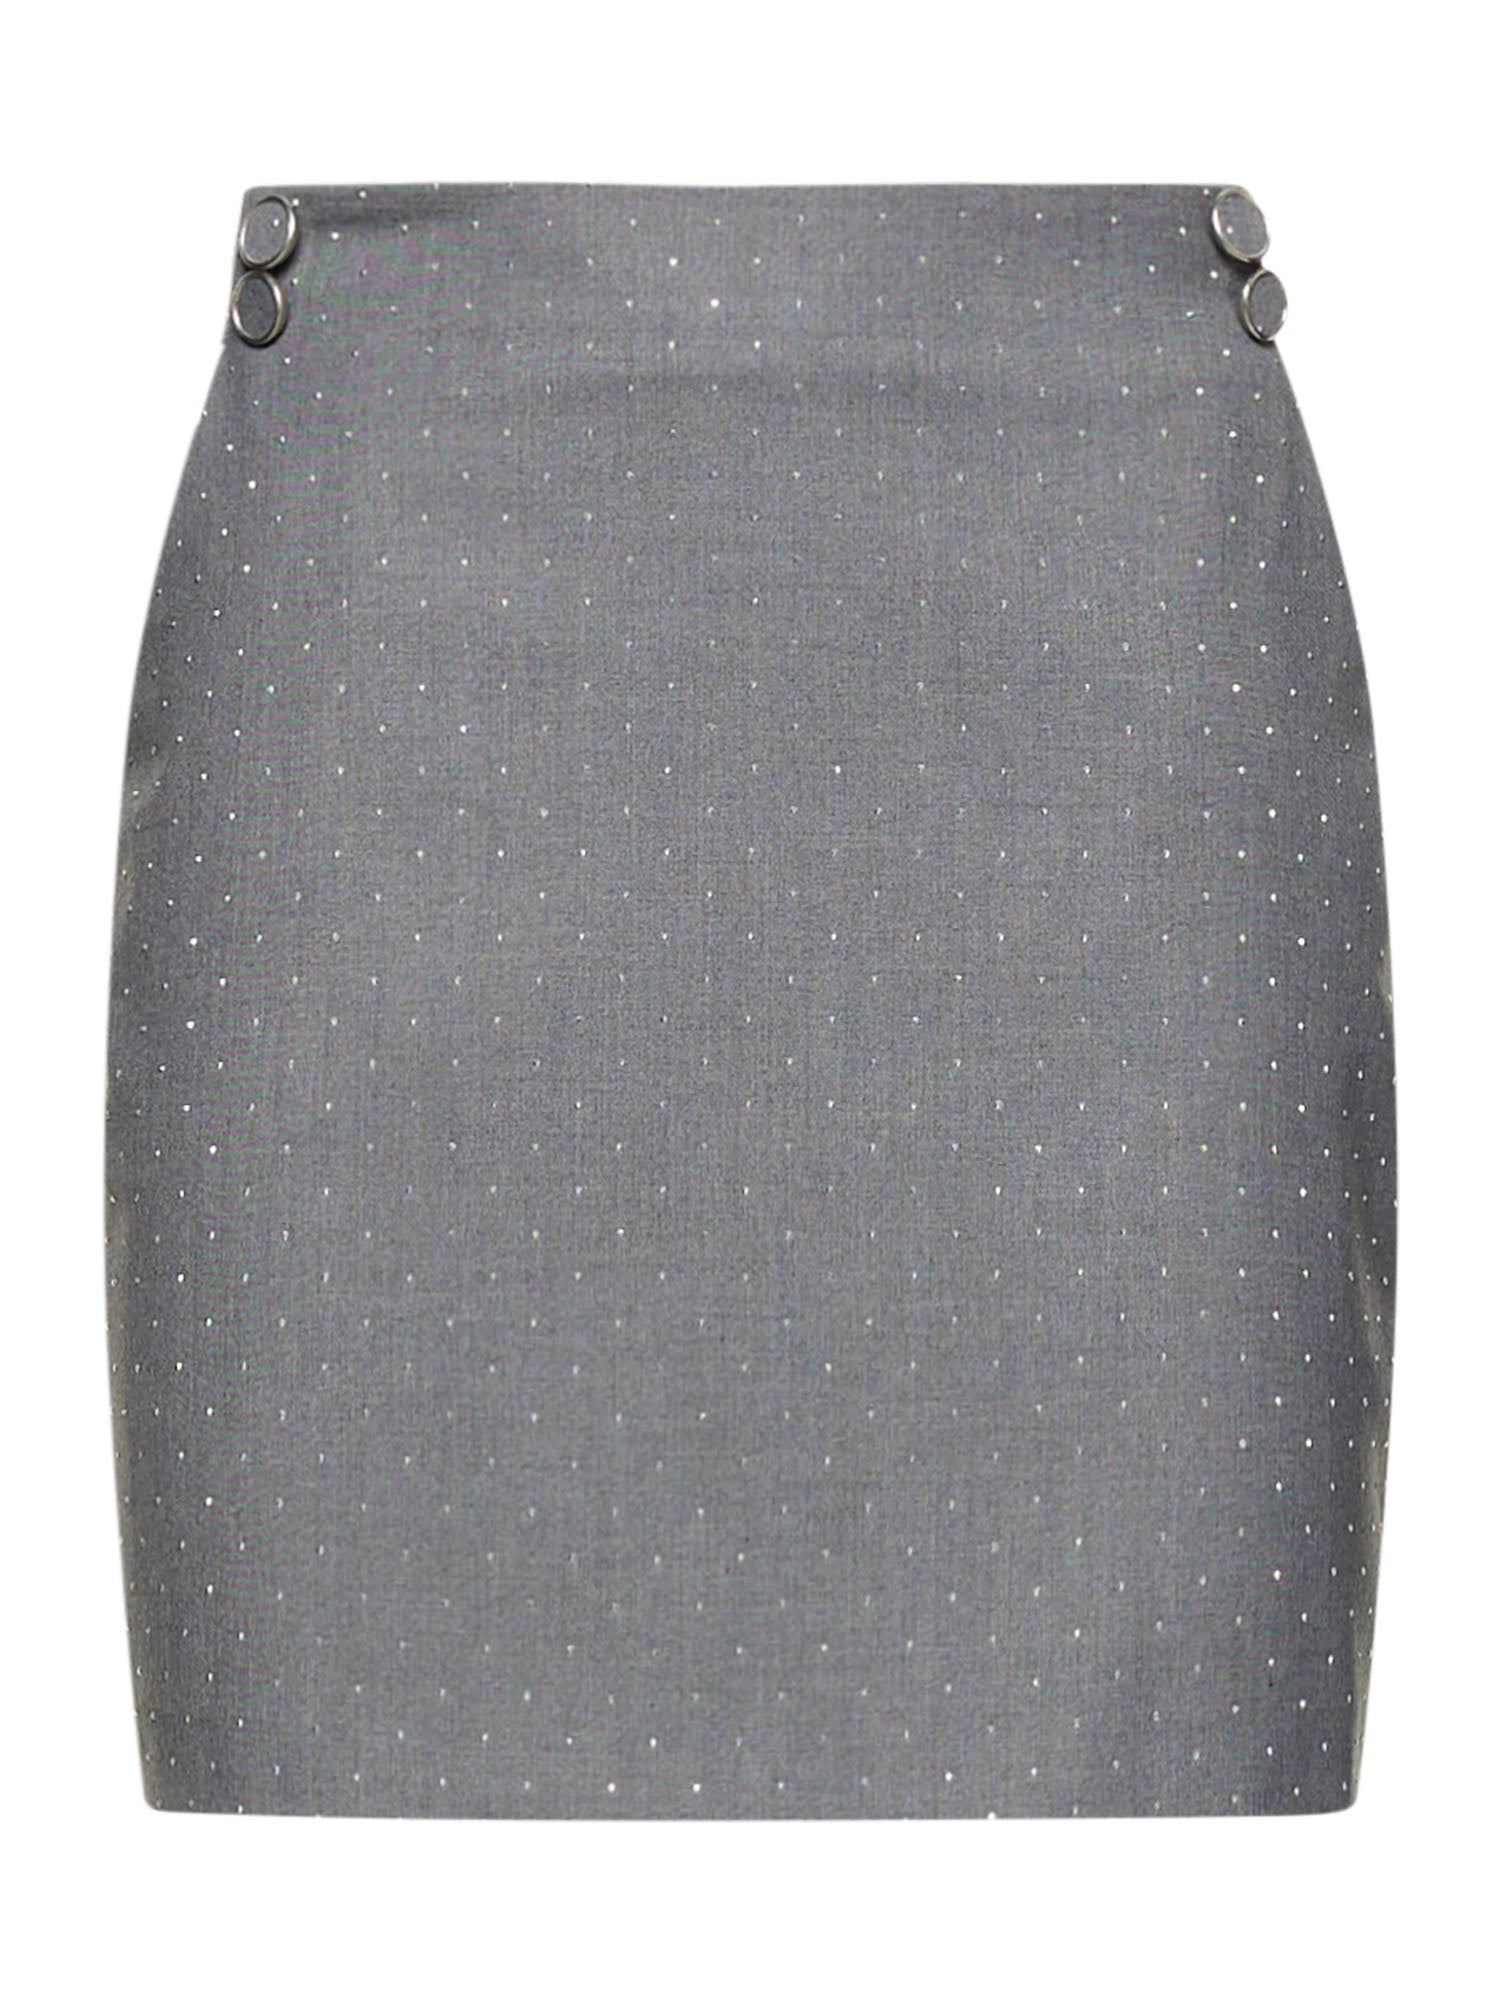 Micro-studded canvas miniskirt